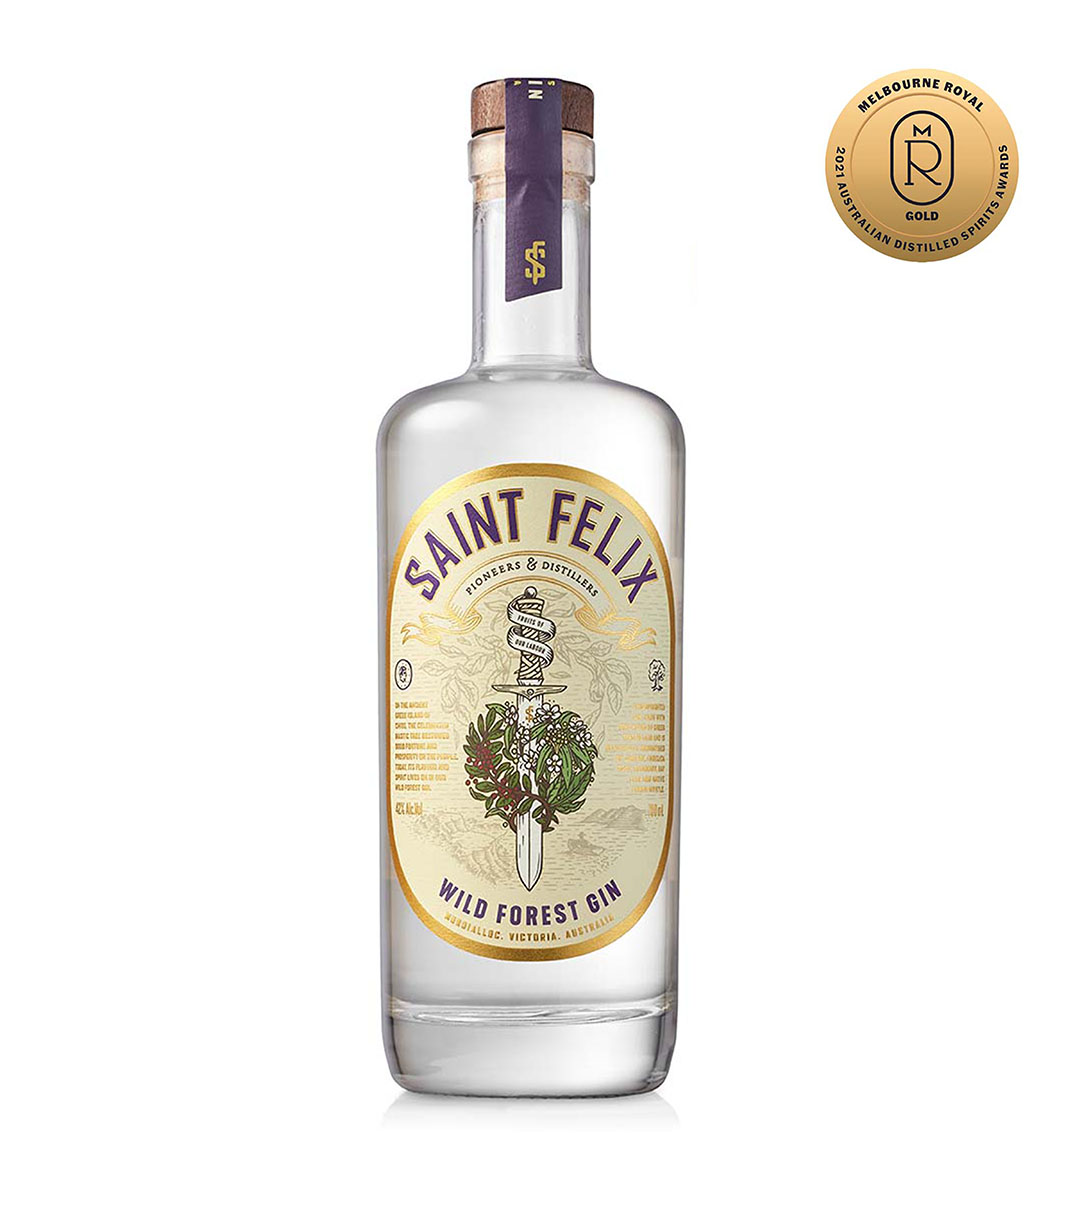 Wild Forest Gin Saint Felix Product